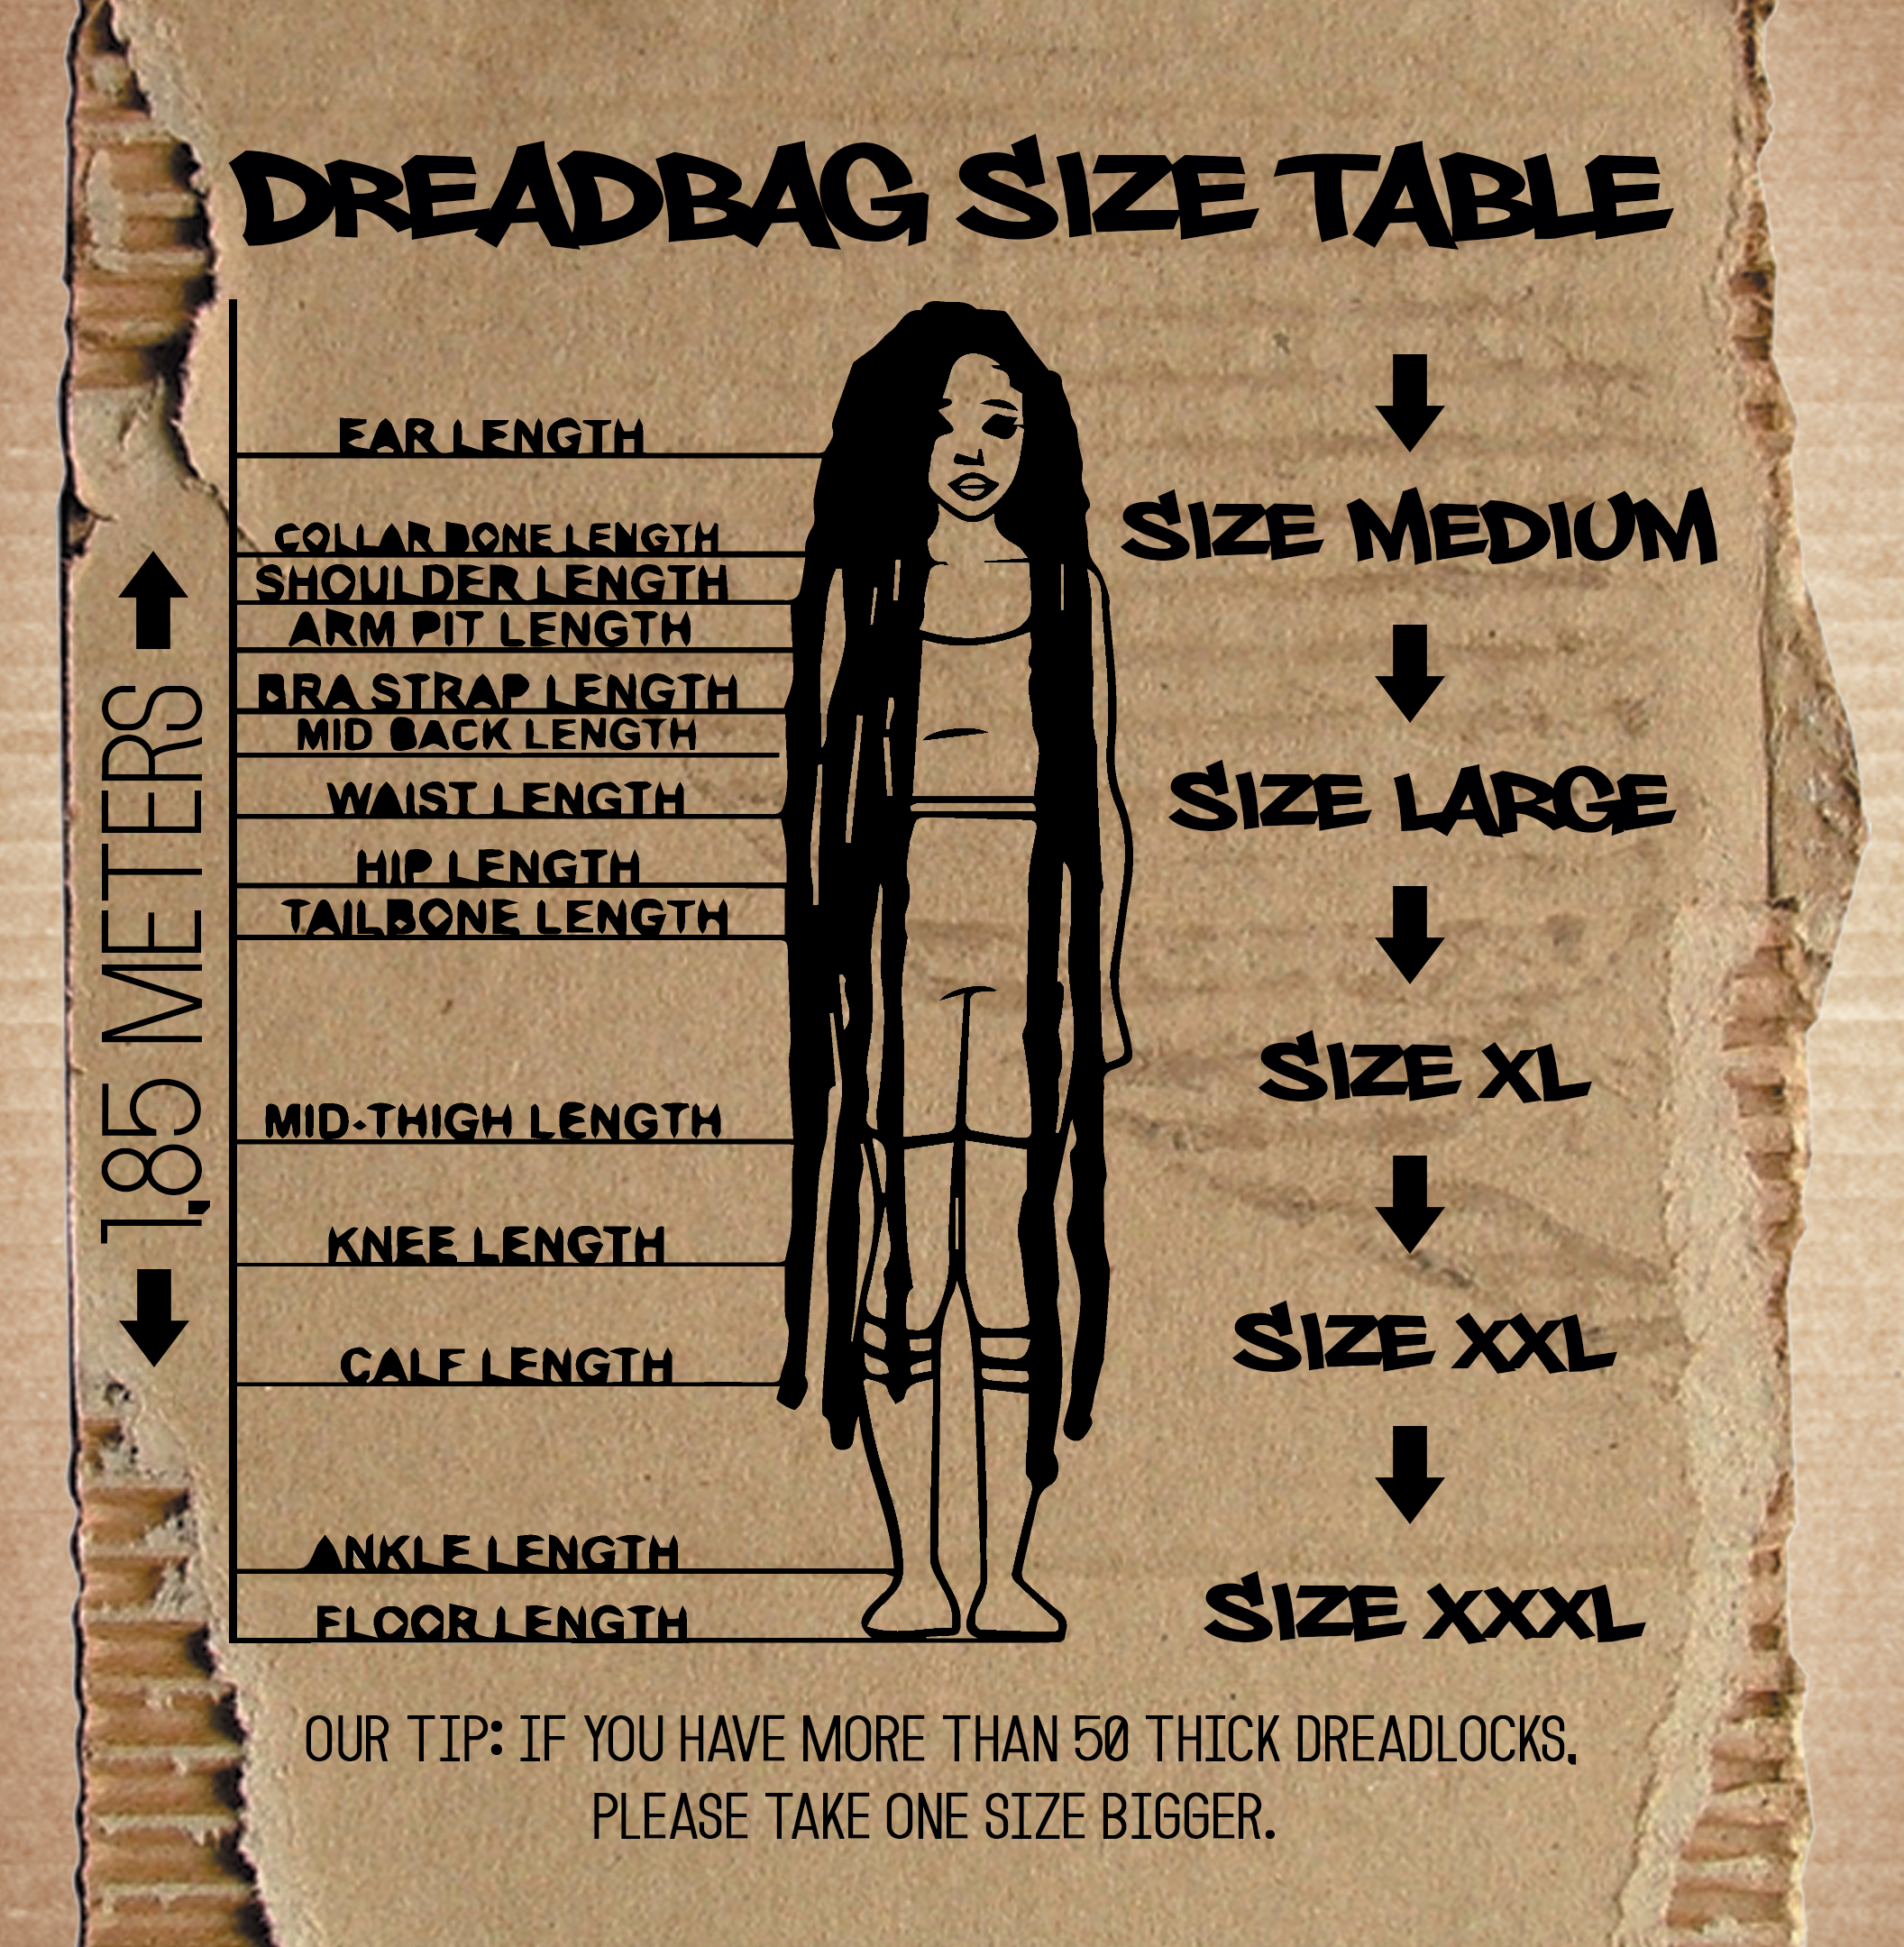 Which Dreadbag size fits me? Dreadbag size table